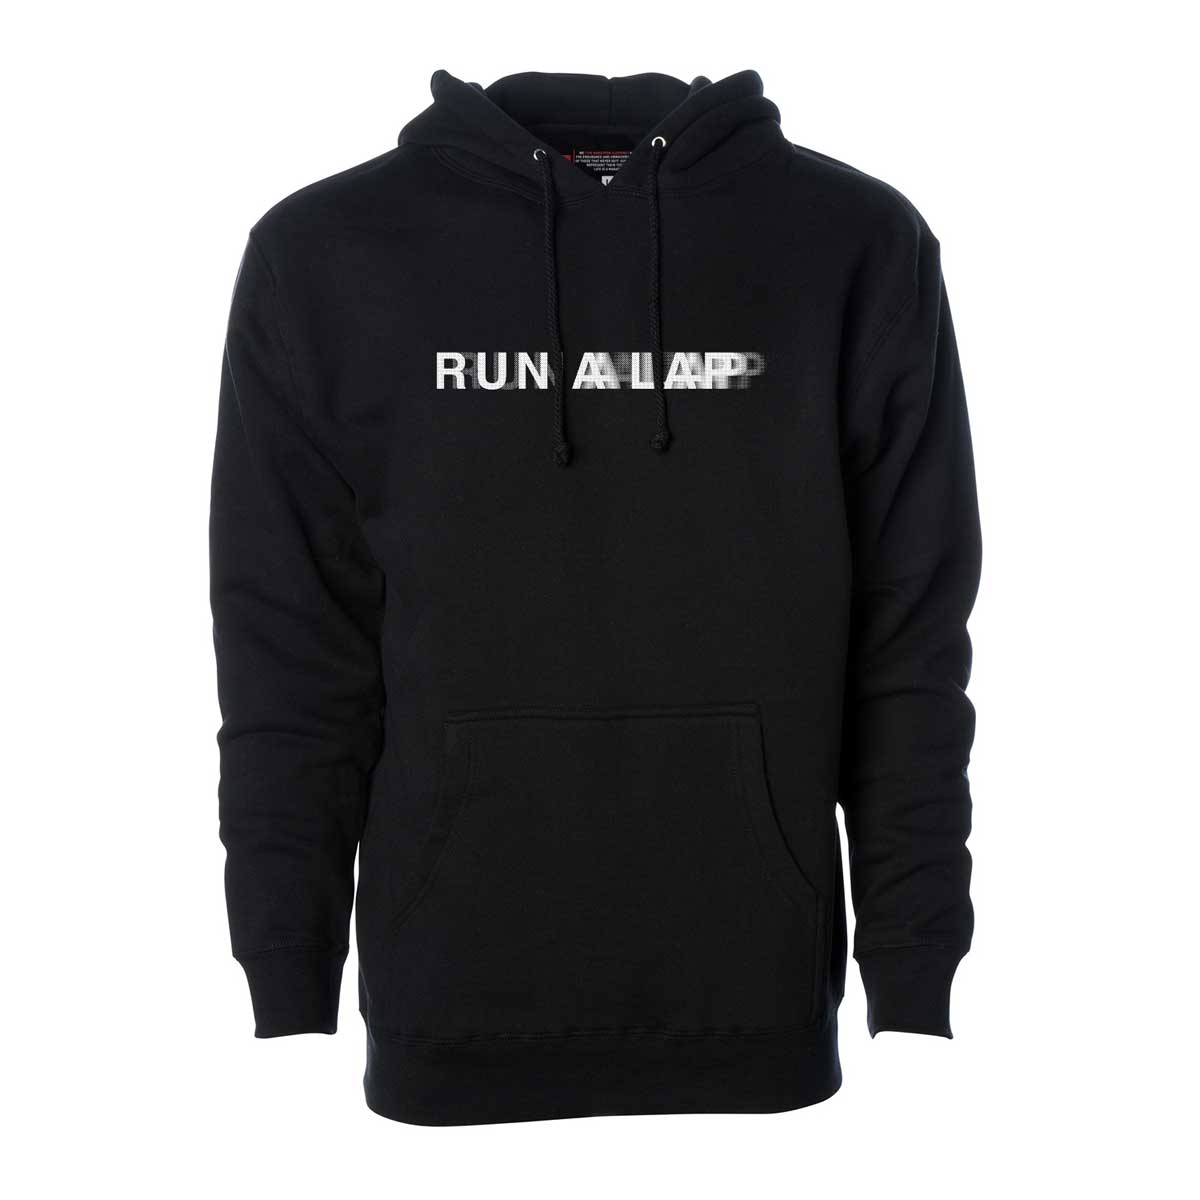 Run A Lap Blurred Hoodie - Black/White